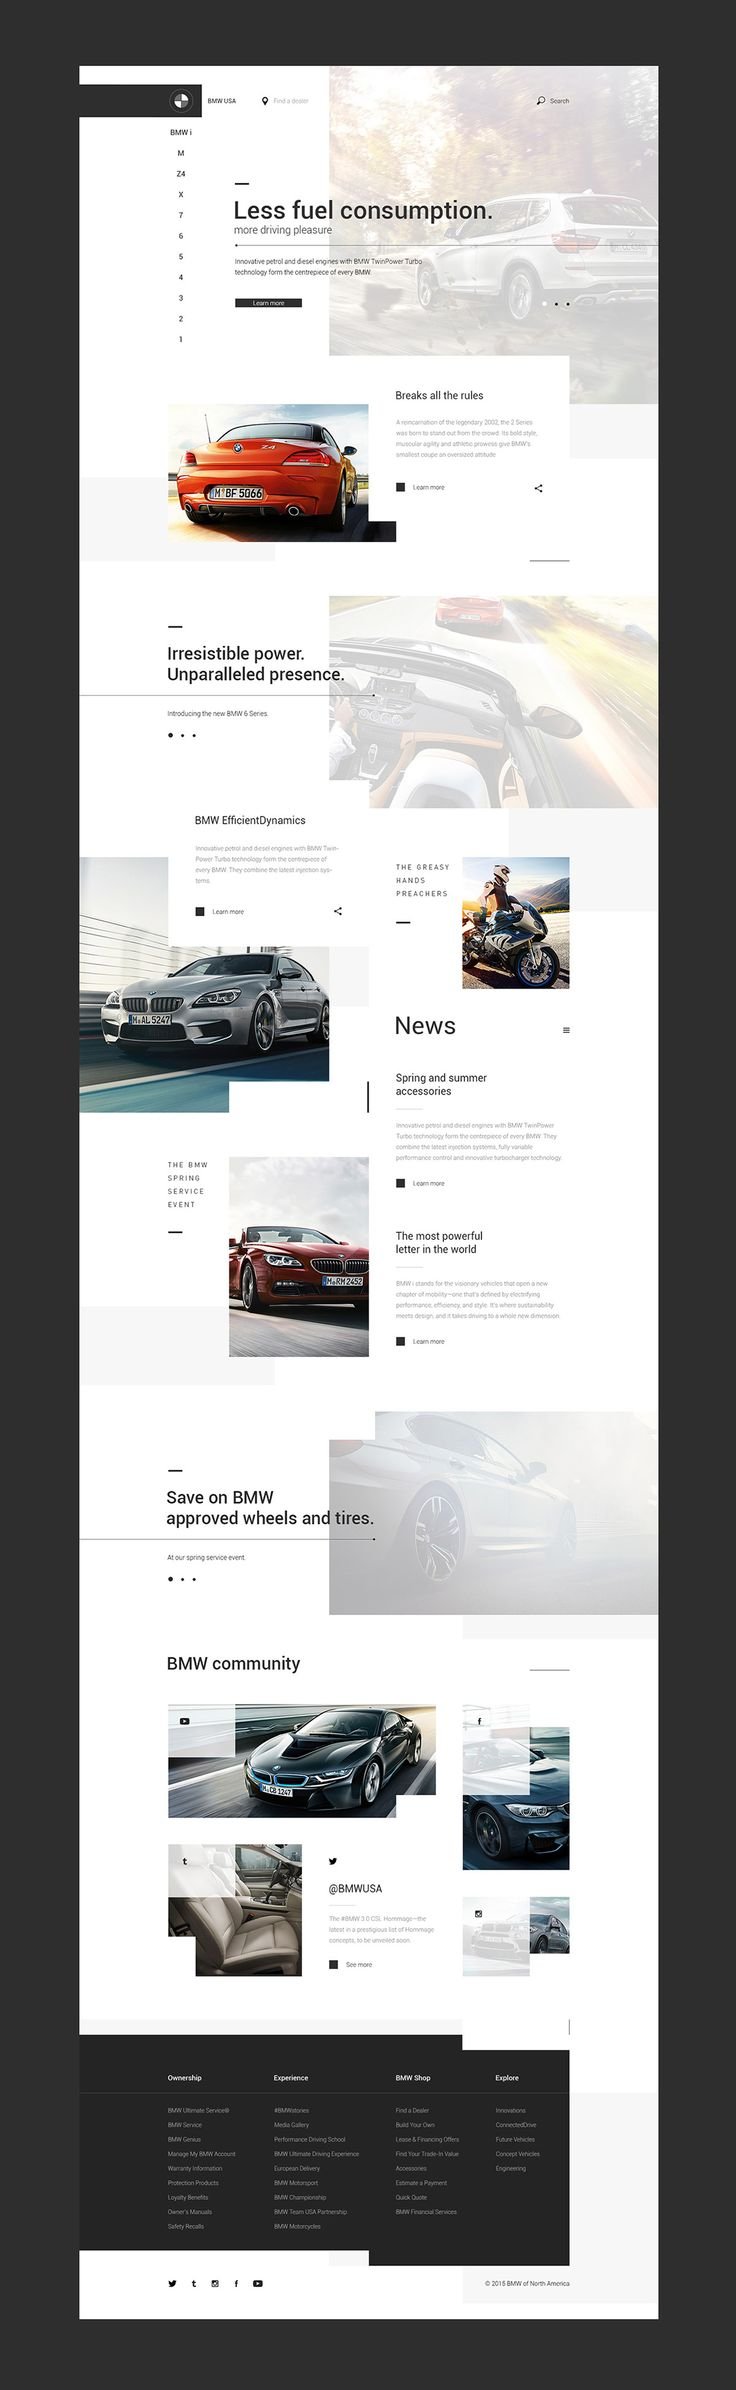 BMW USA website concept on Behance